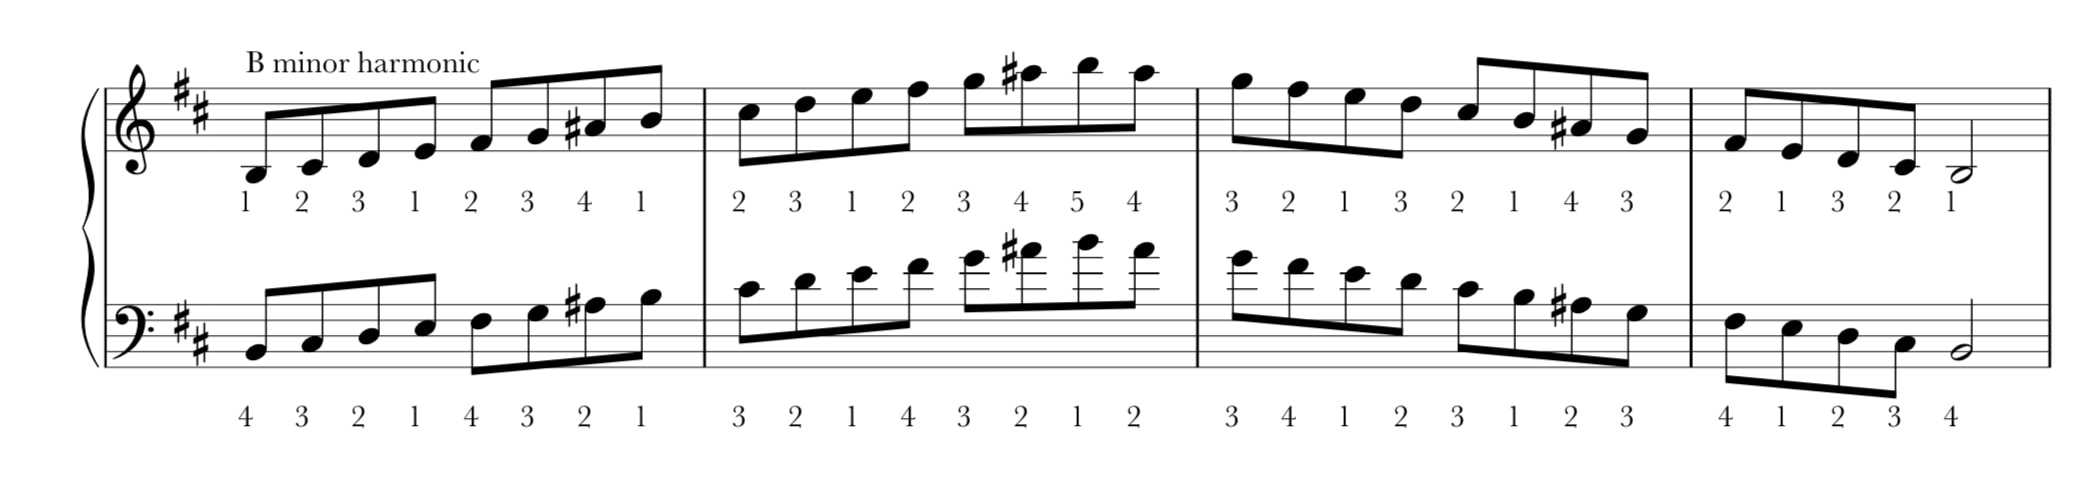 b flat harmonic minor